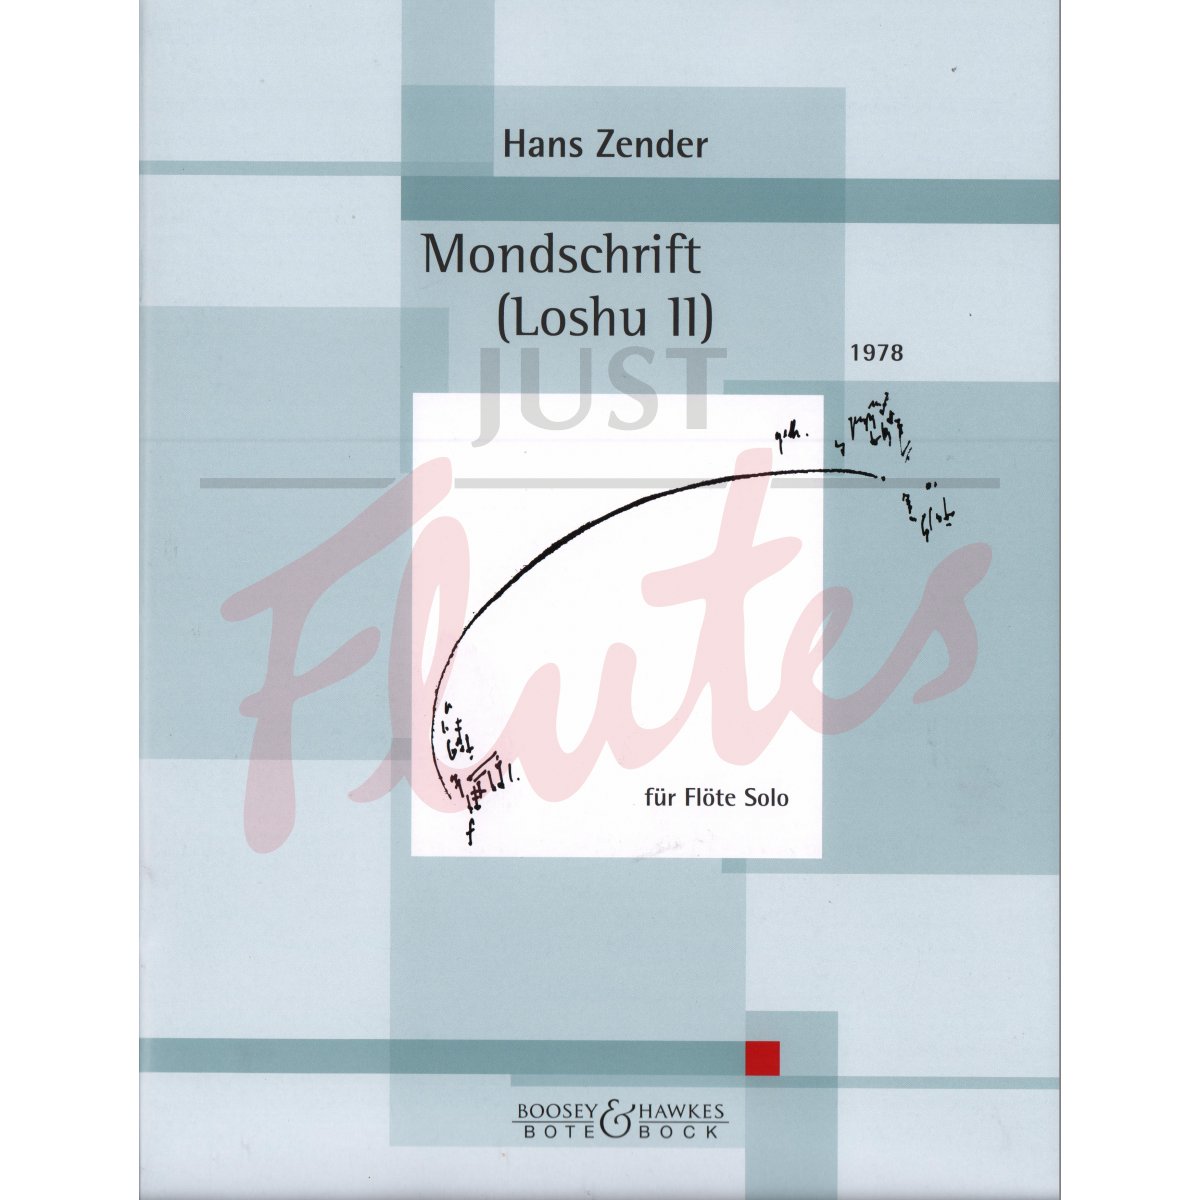 Mondschrift (Loshu II) for Flute Solo